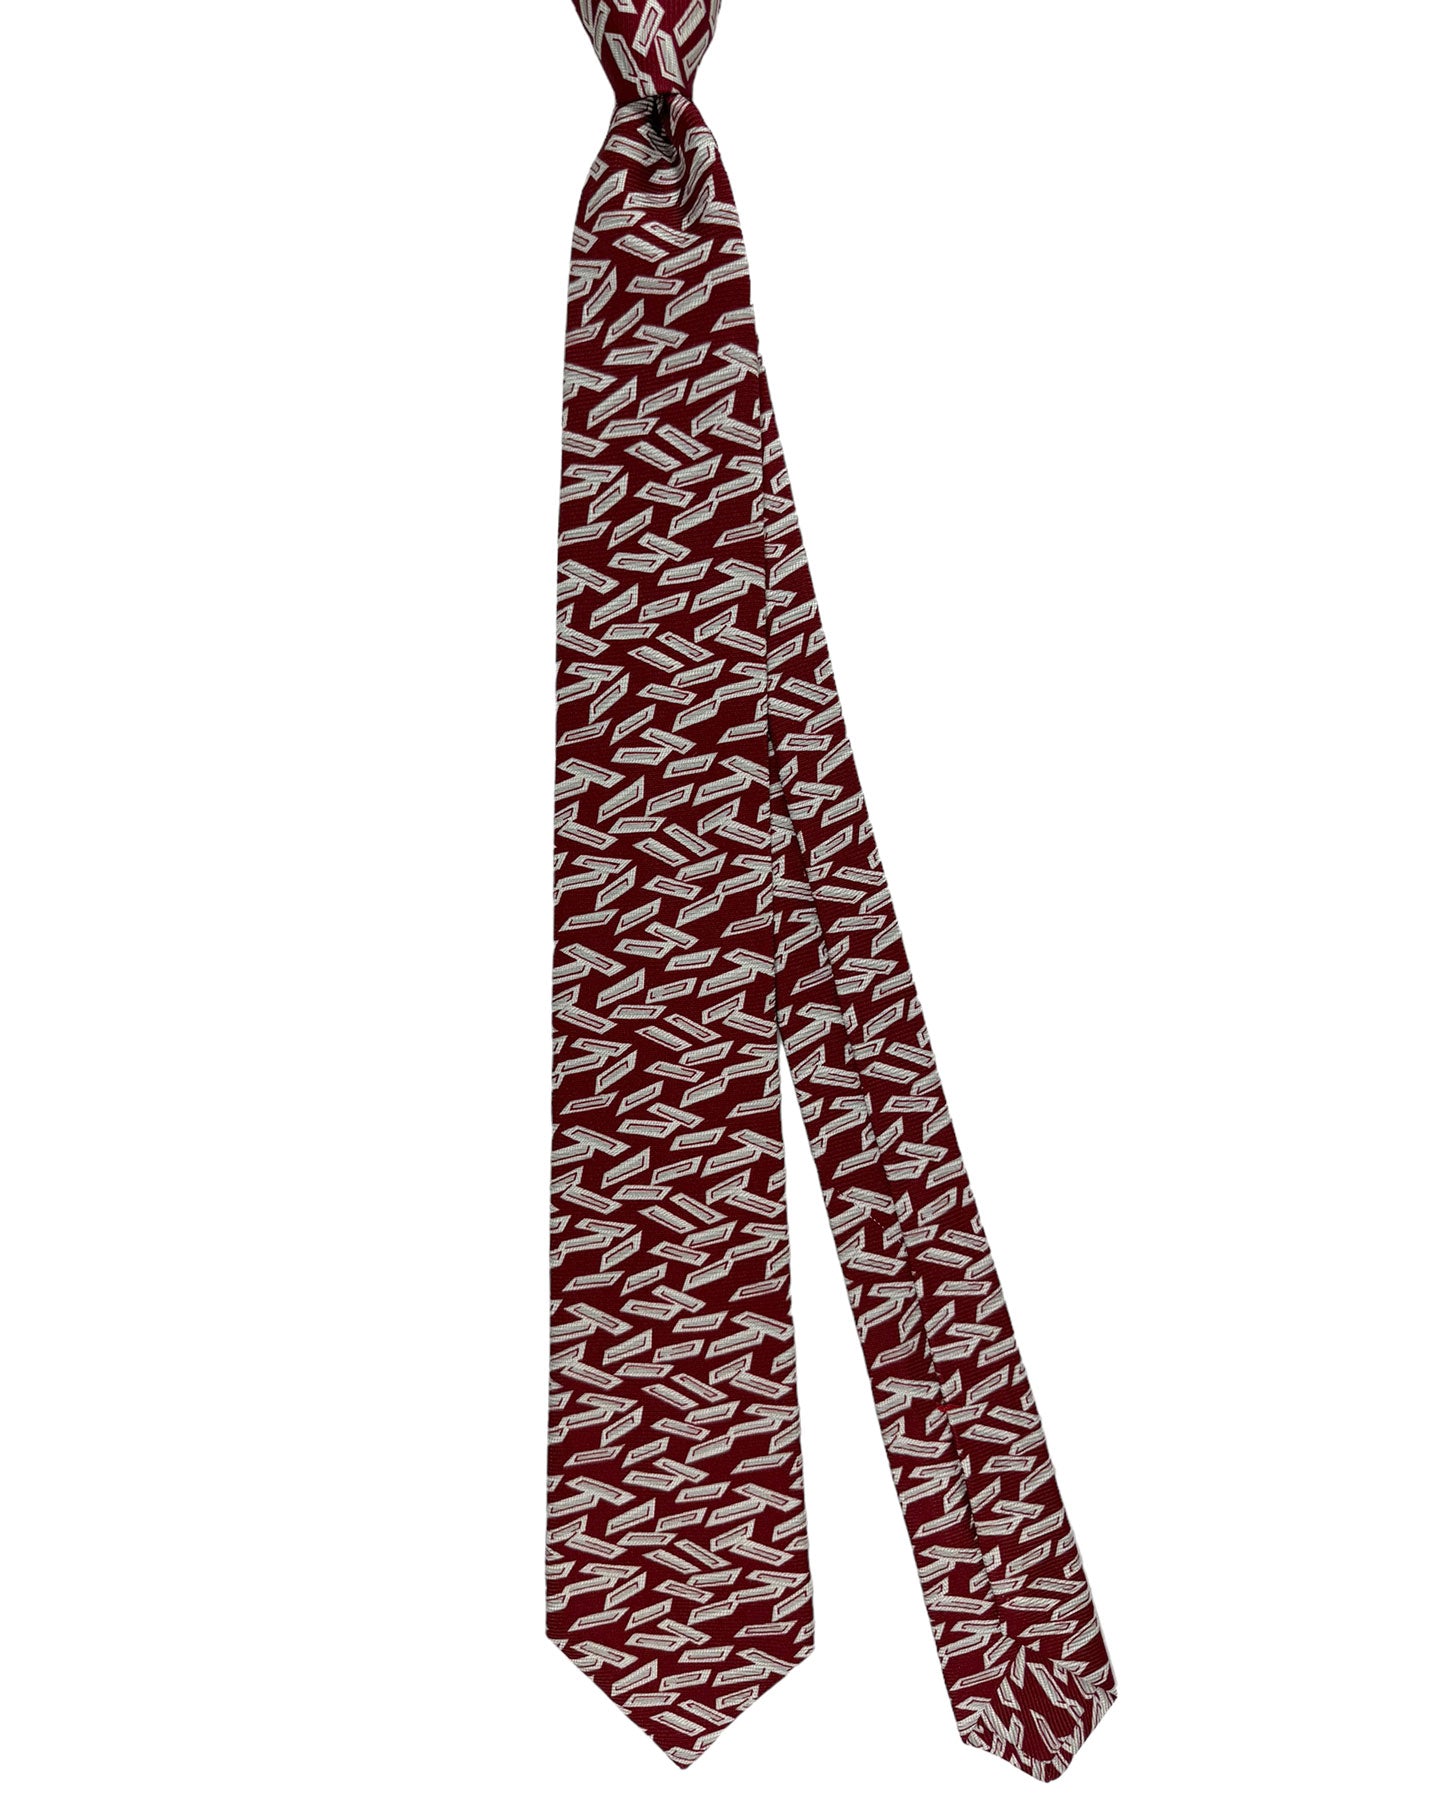 Kiton Silk Tie Maroon Gray Geometric Design - Sevenfold Necktie